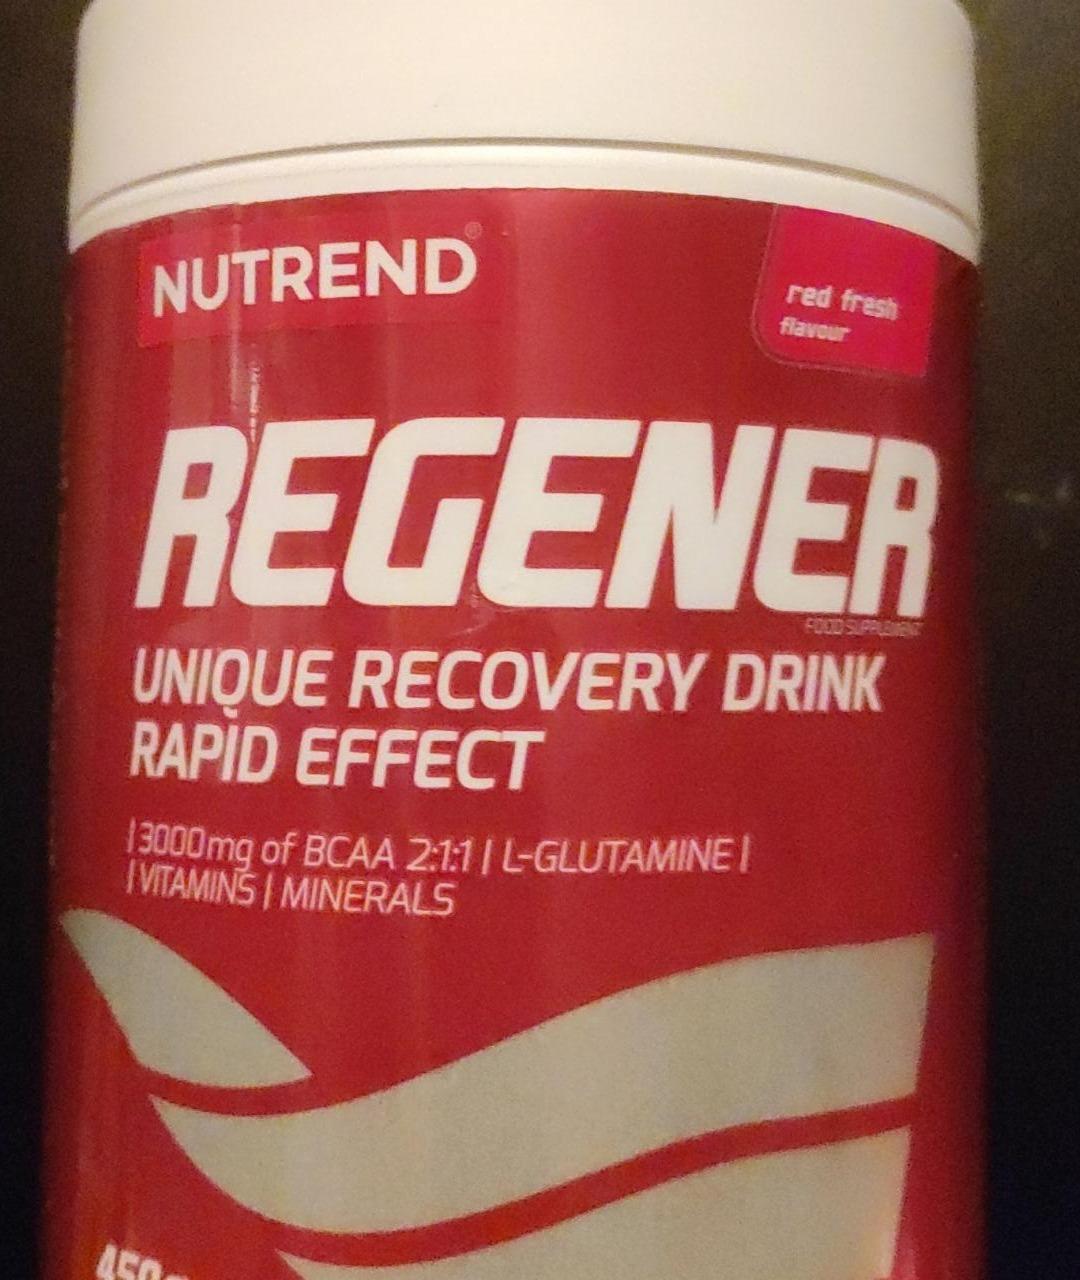 Fotografie - Regener unique recovery drink red fresh Nutrend